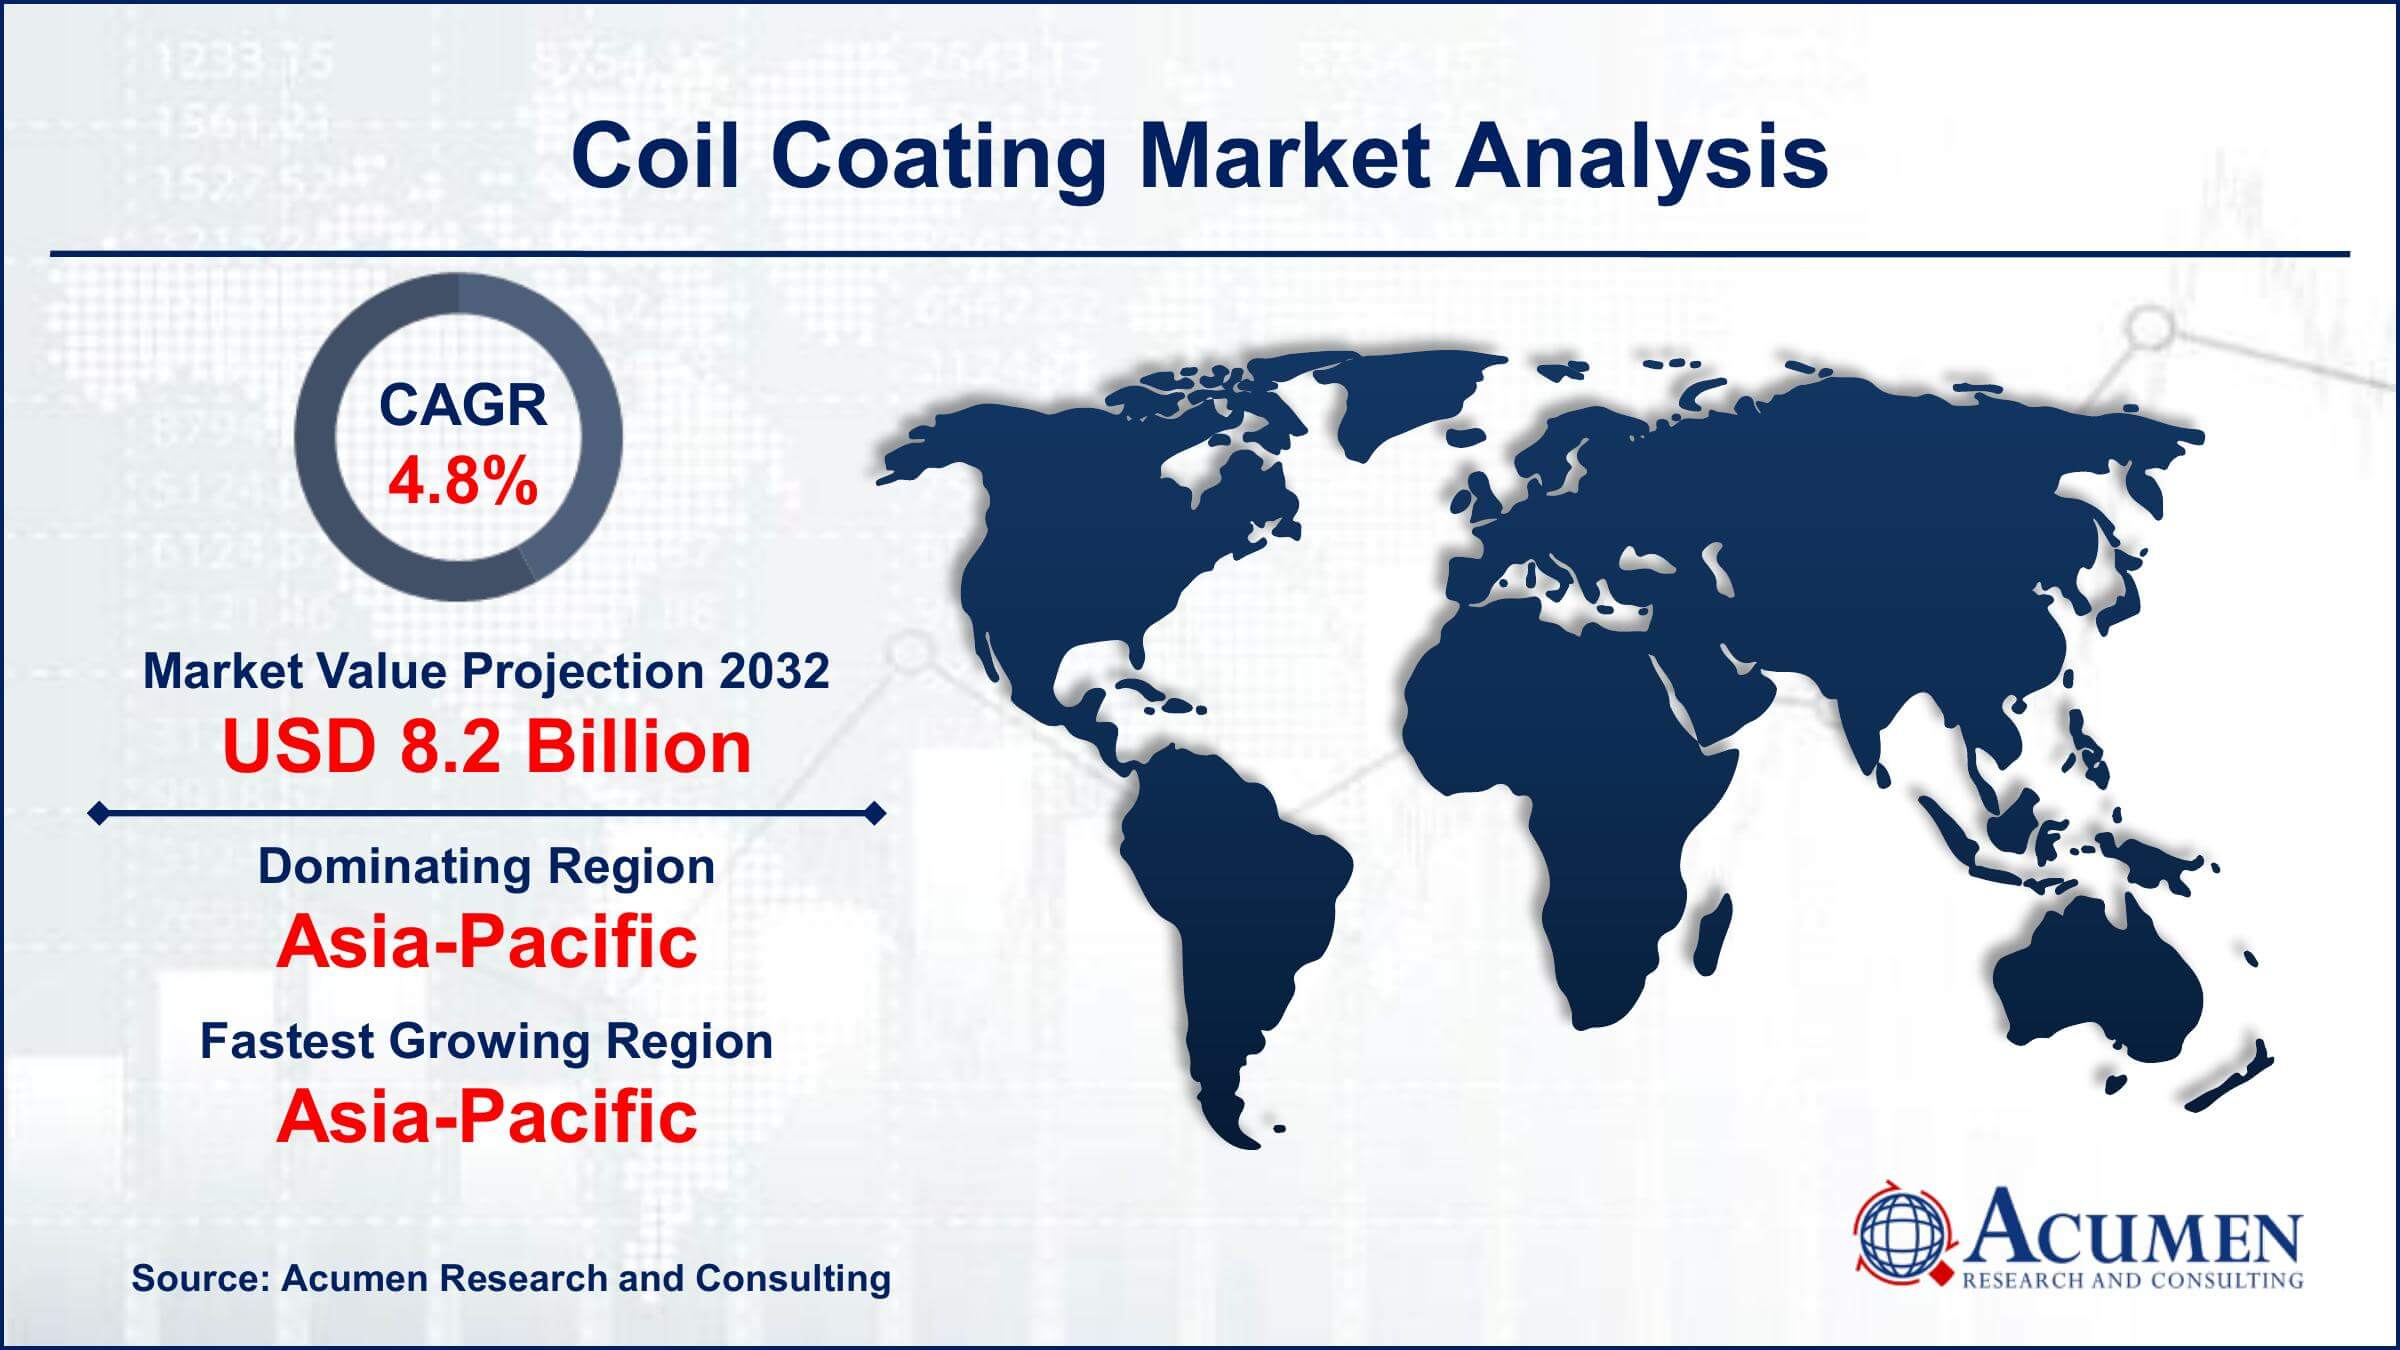 Global Coil Coating Market Trends